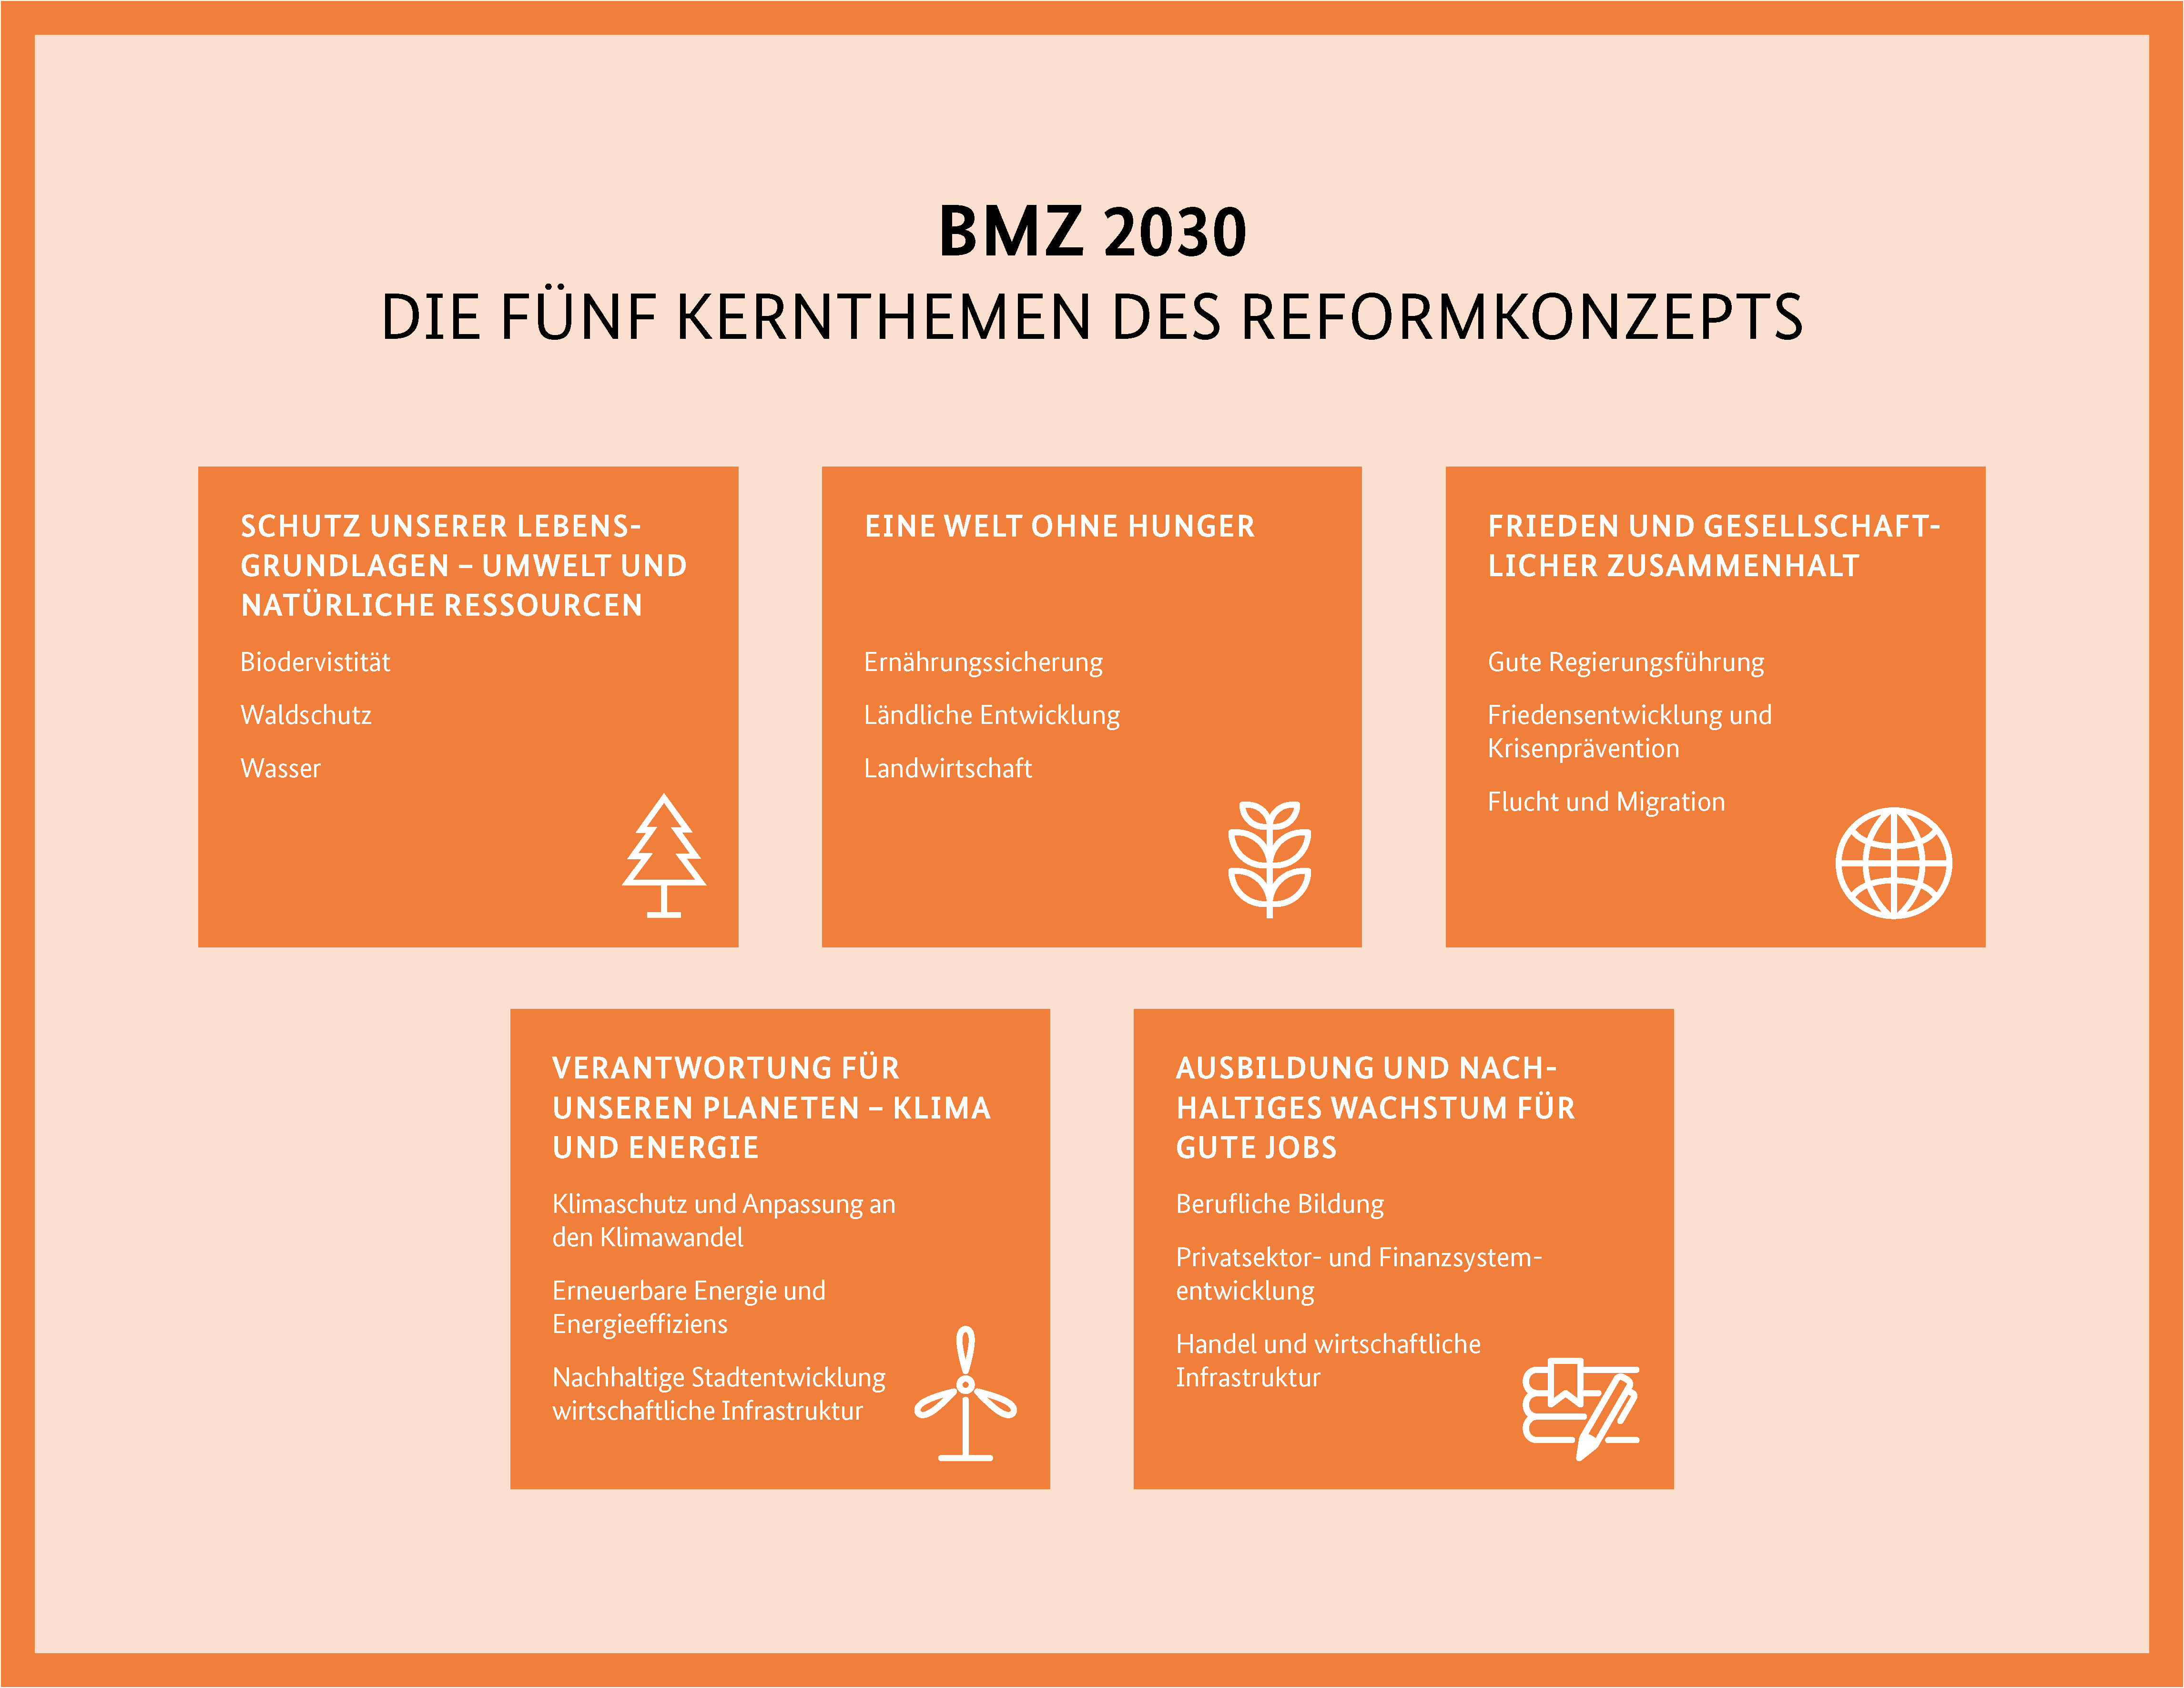 BMZ Reformkonzept 5 Kernthemen